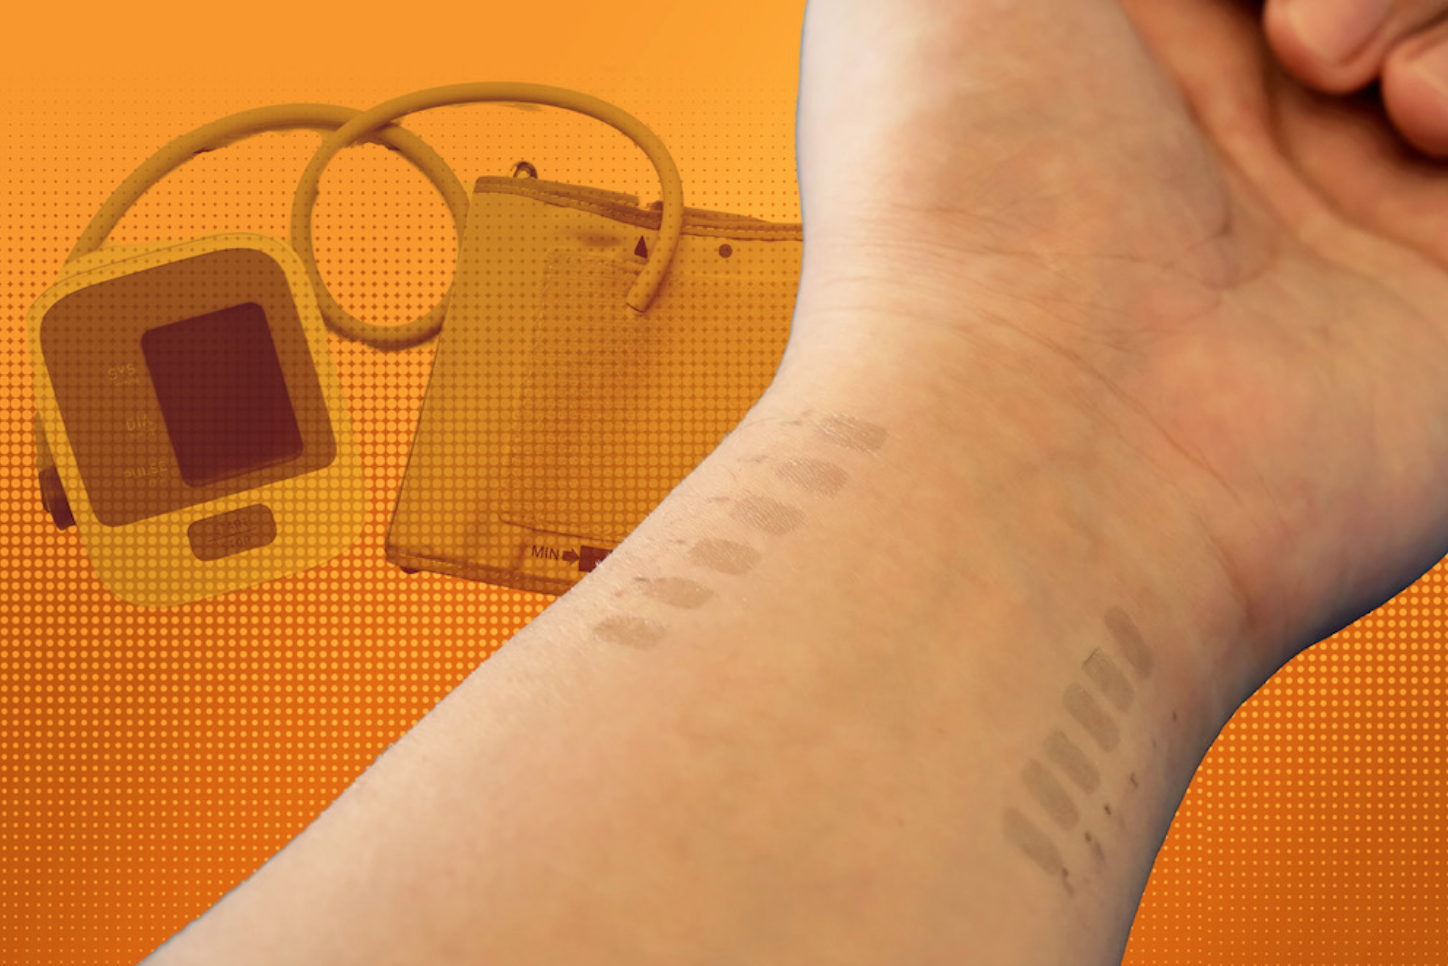 Continuous, cuffless blood pressure monitoring via graphene tattoo